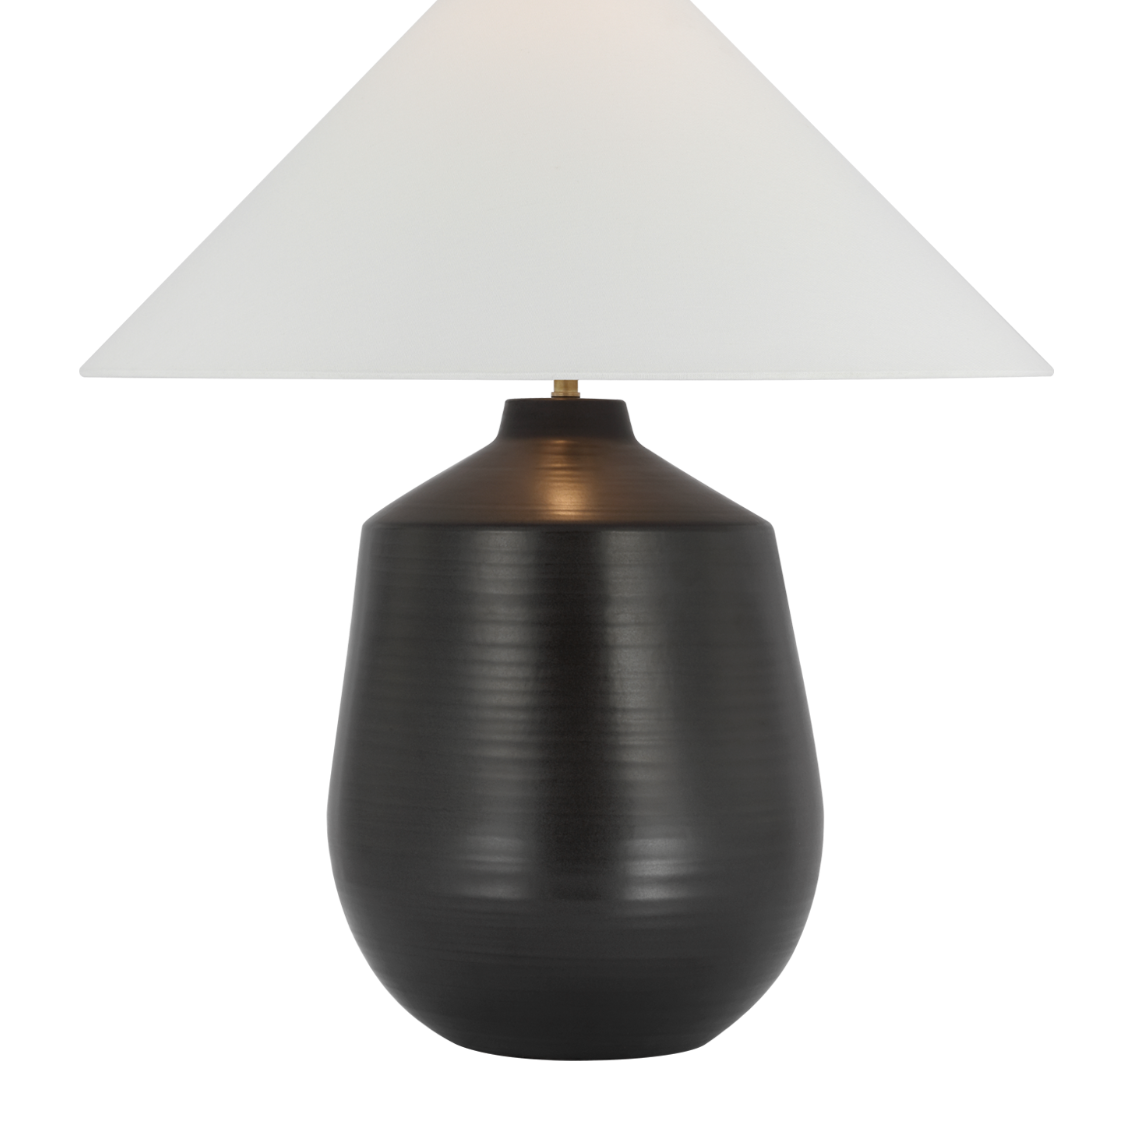 Lillis Large Table Lamp: Stylish Lighting Solution